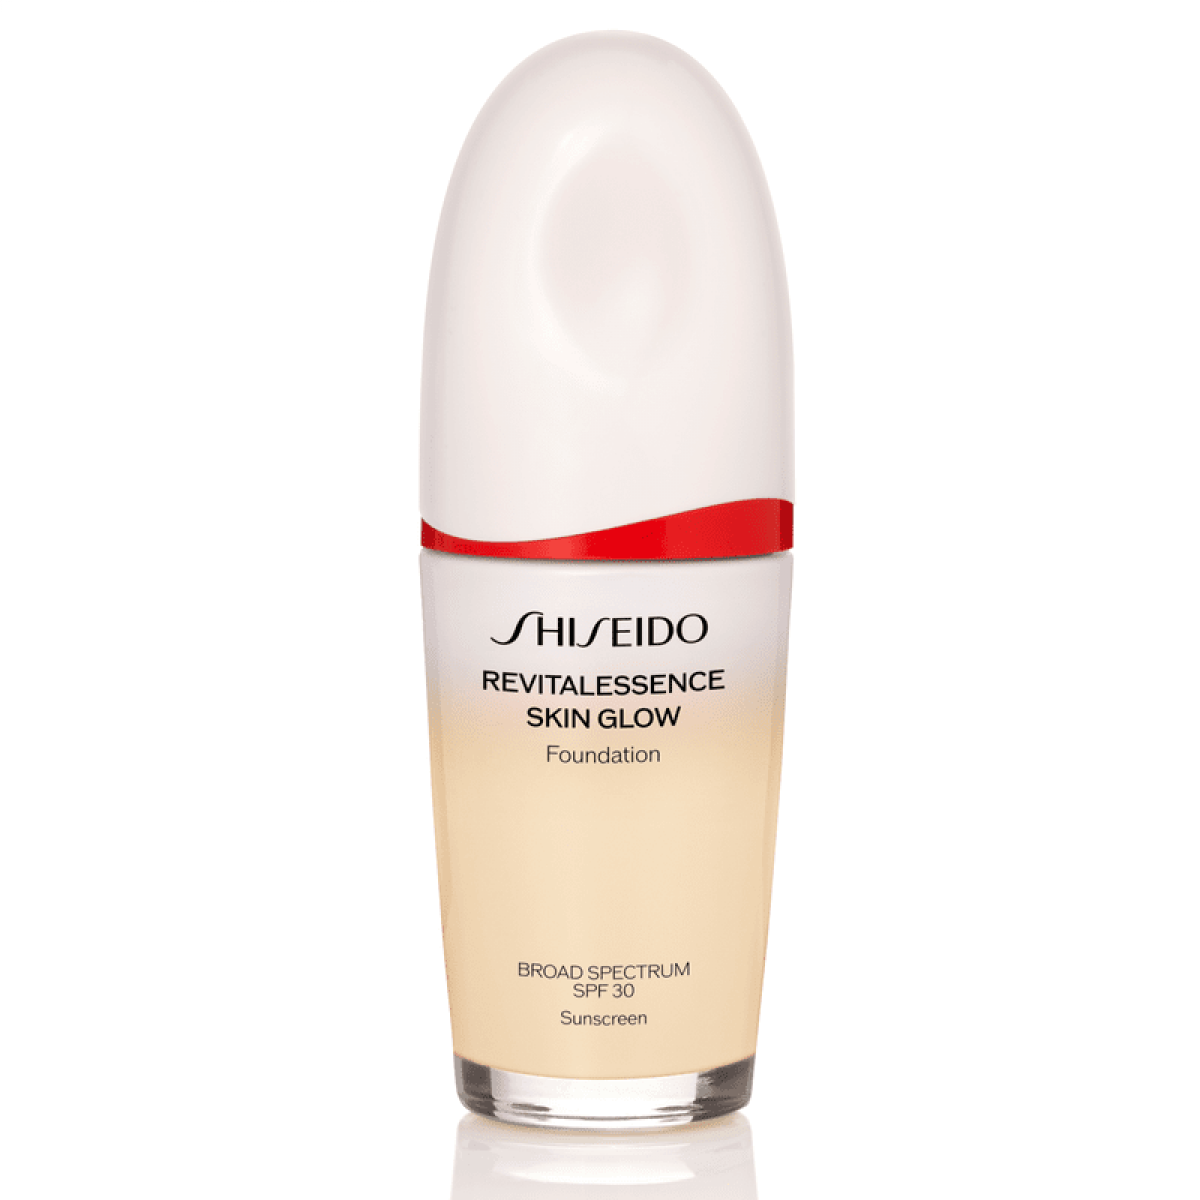 Shiseido, Revitalessence Skin Glow Foundation